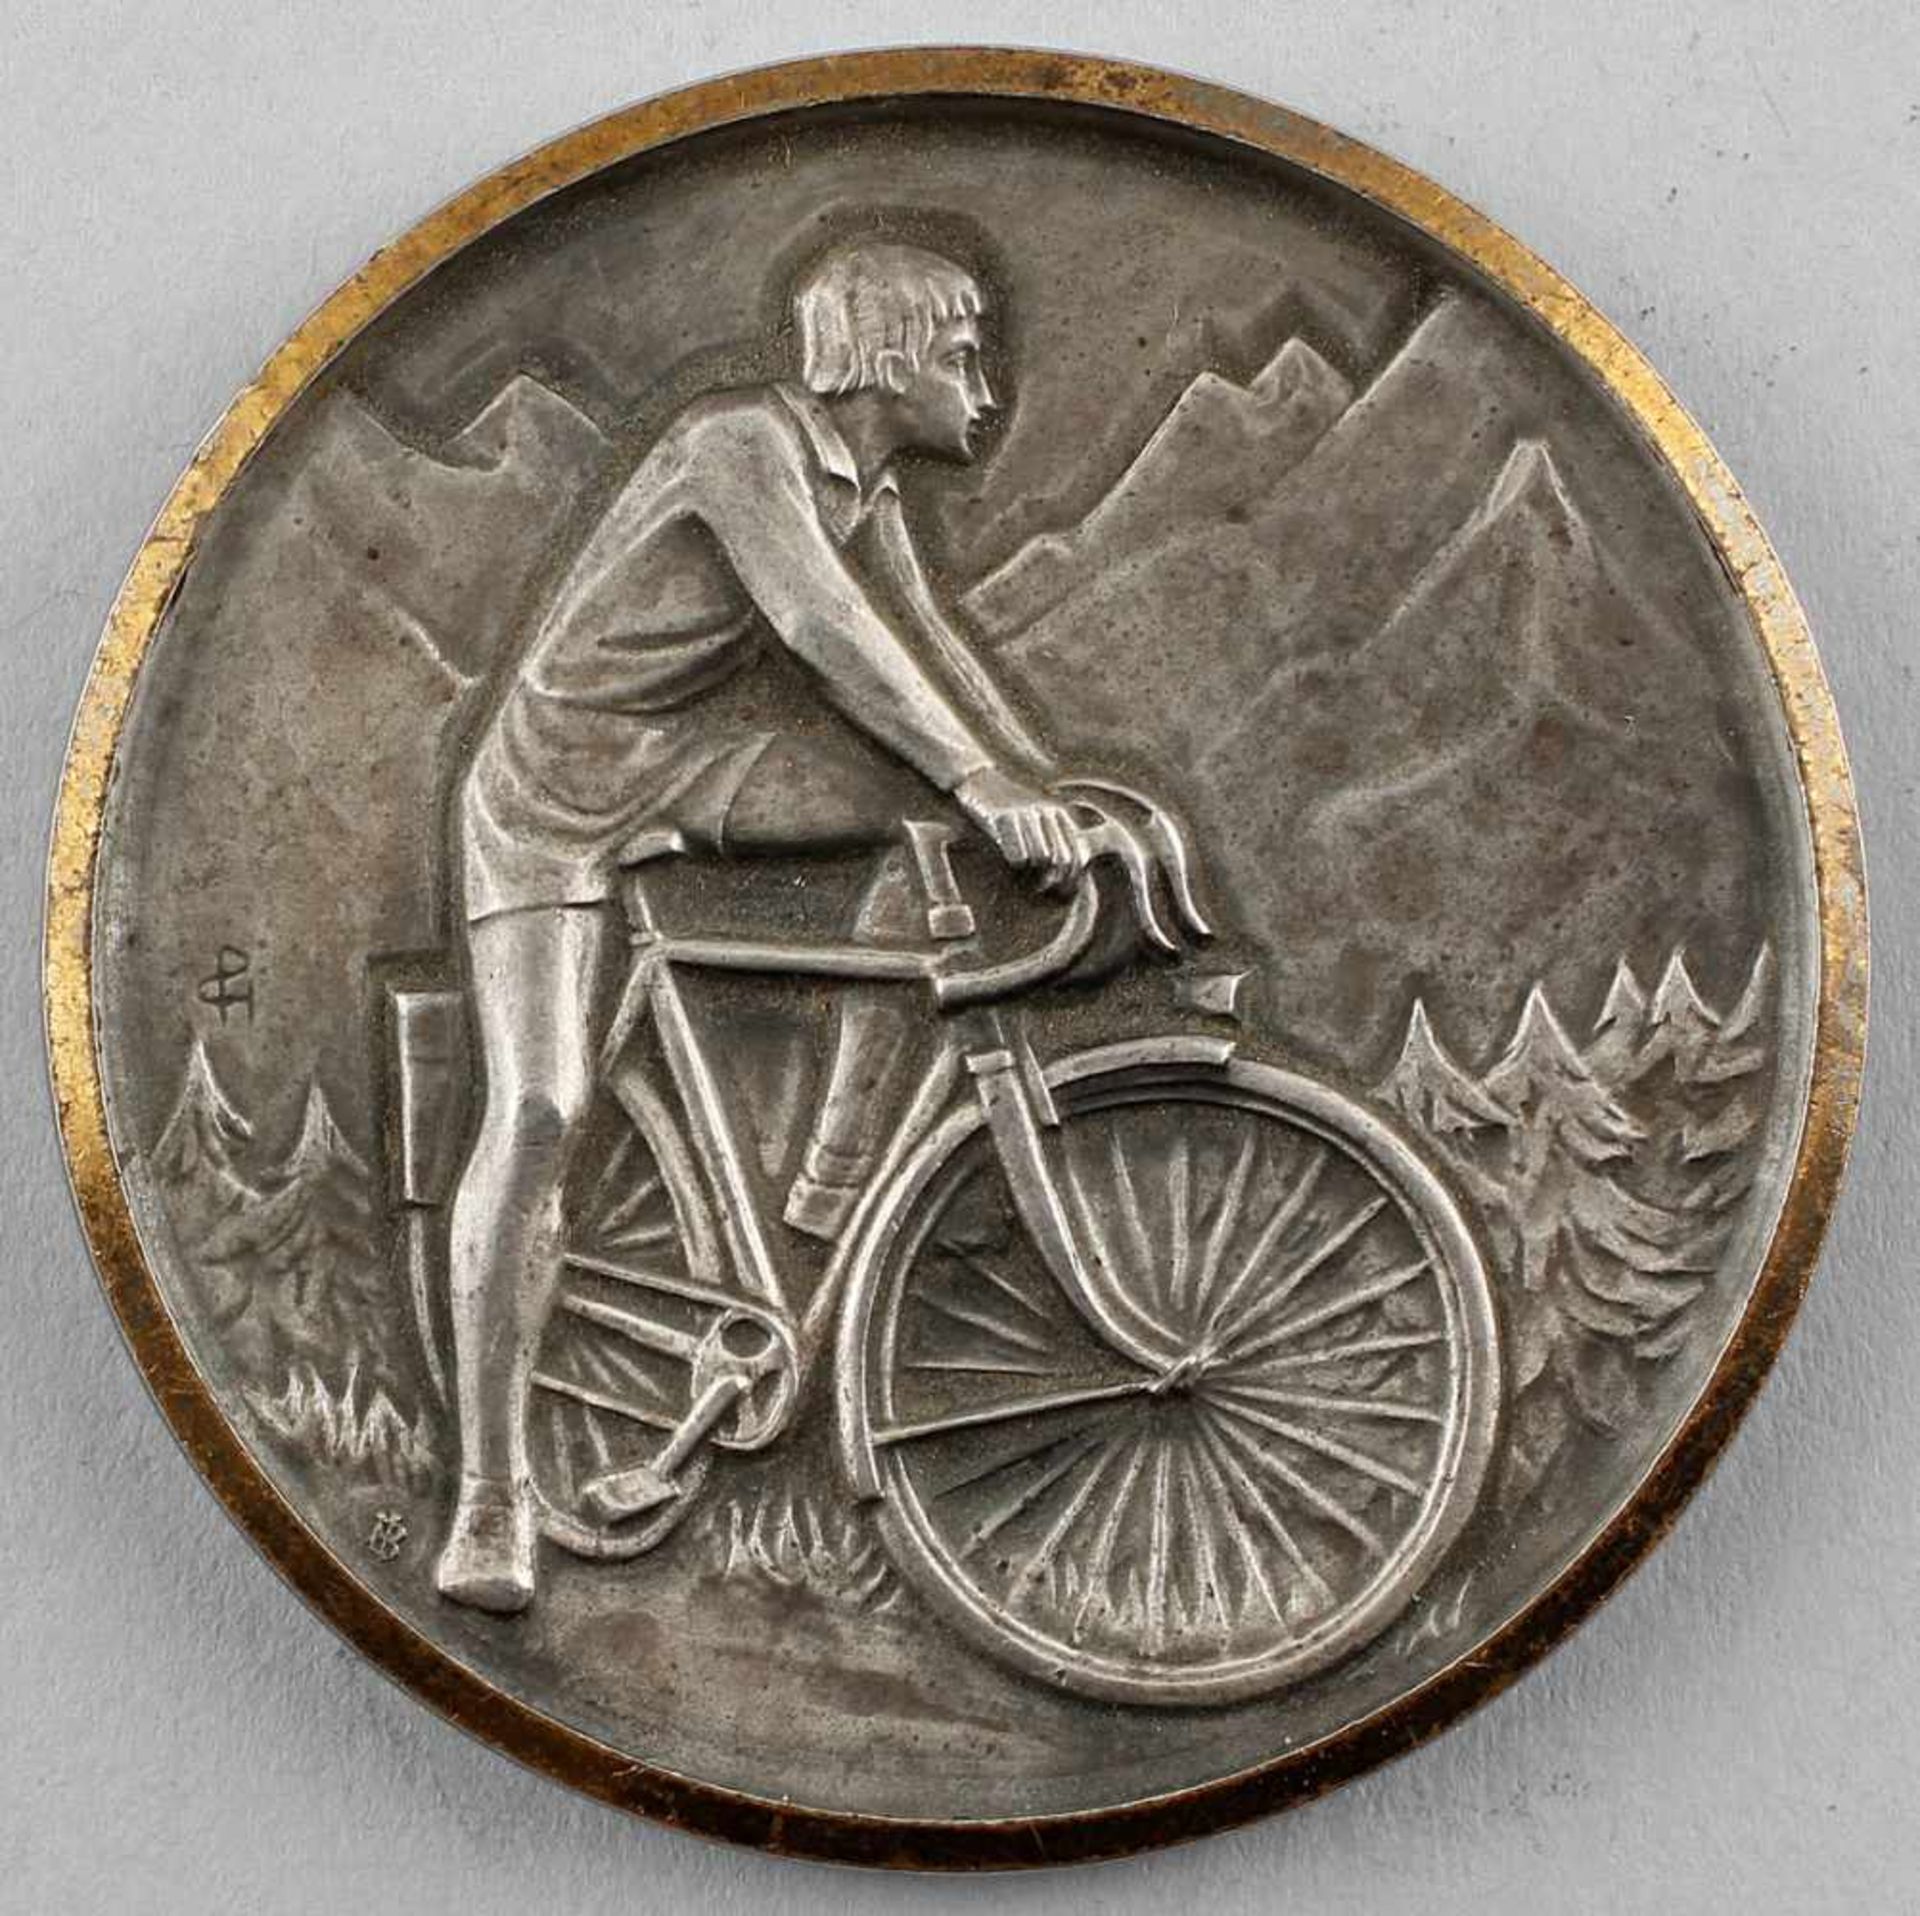 Medaille Radfahrer :. silberfarb. mit goldfarb. Rand, signiert PH, auf Rand geprägt "J. Balme", Vs